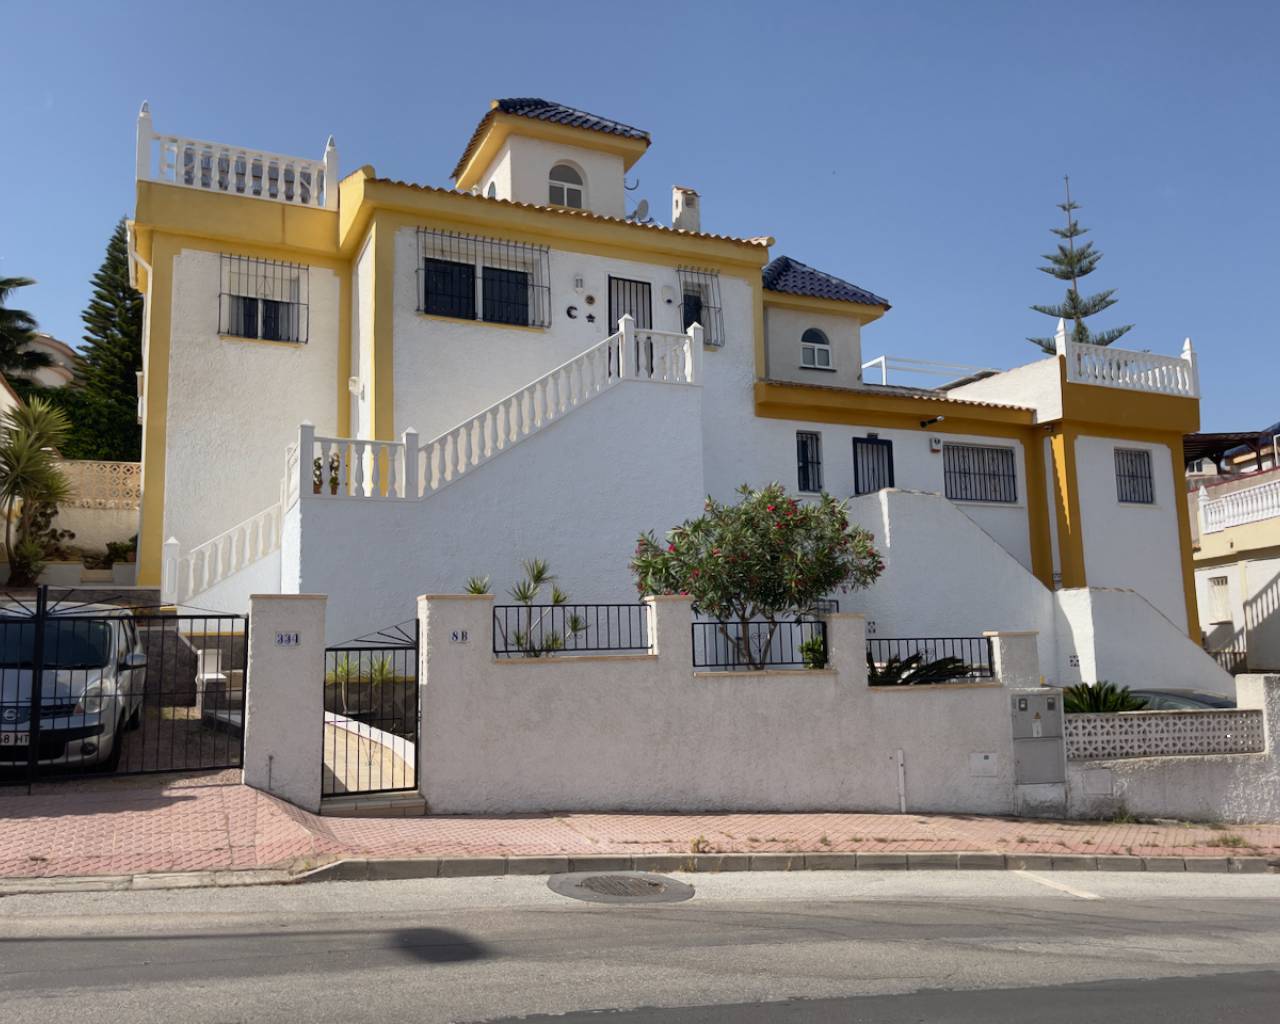 For sale: 2 bedroom house / villa in Rojales, Costa Blanca